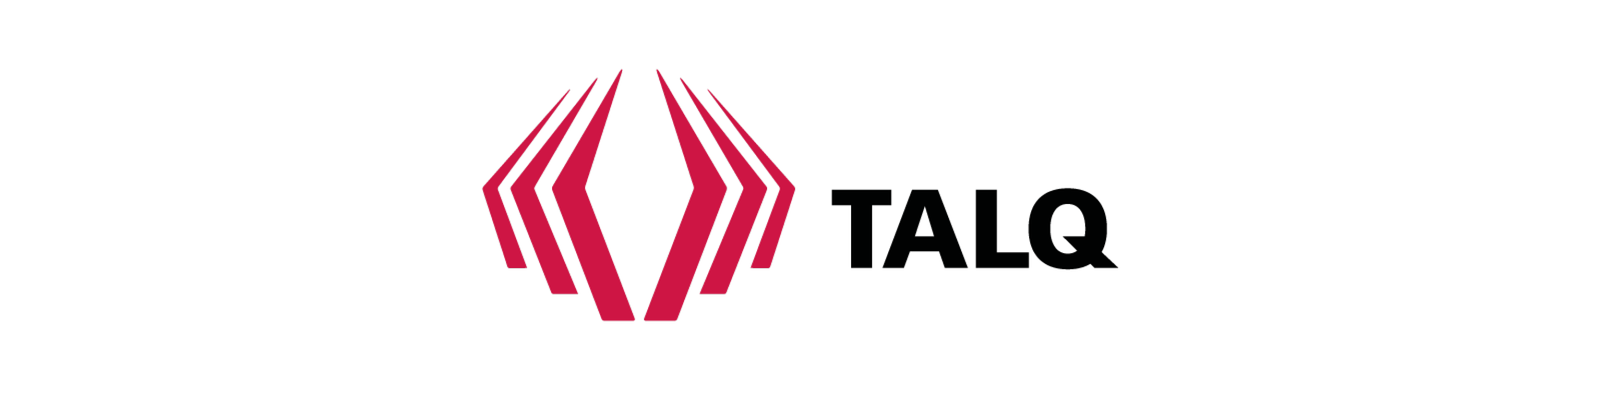 Talq Logo 2